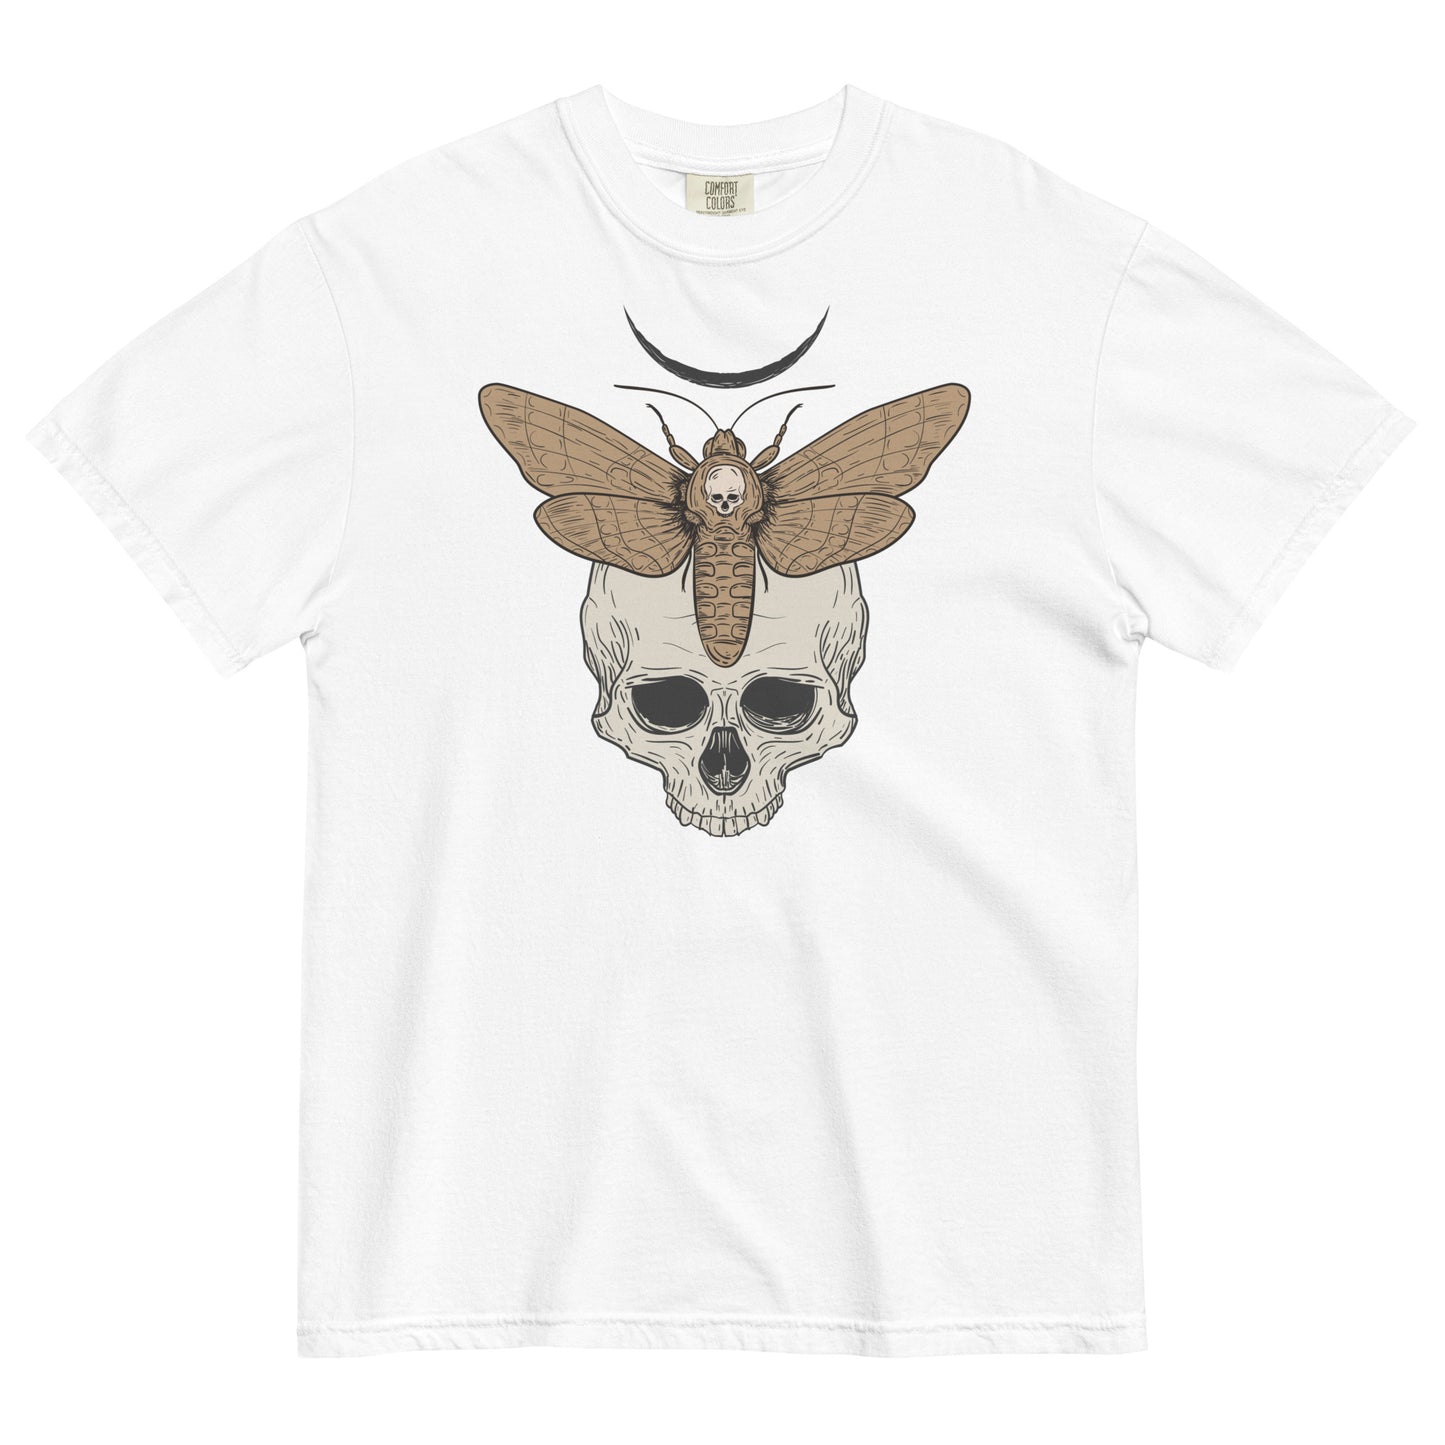 Deathmoth and Skull  t-shirt